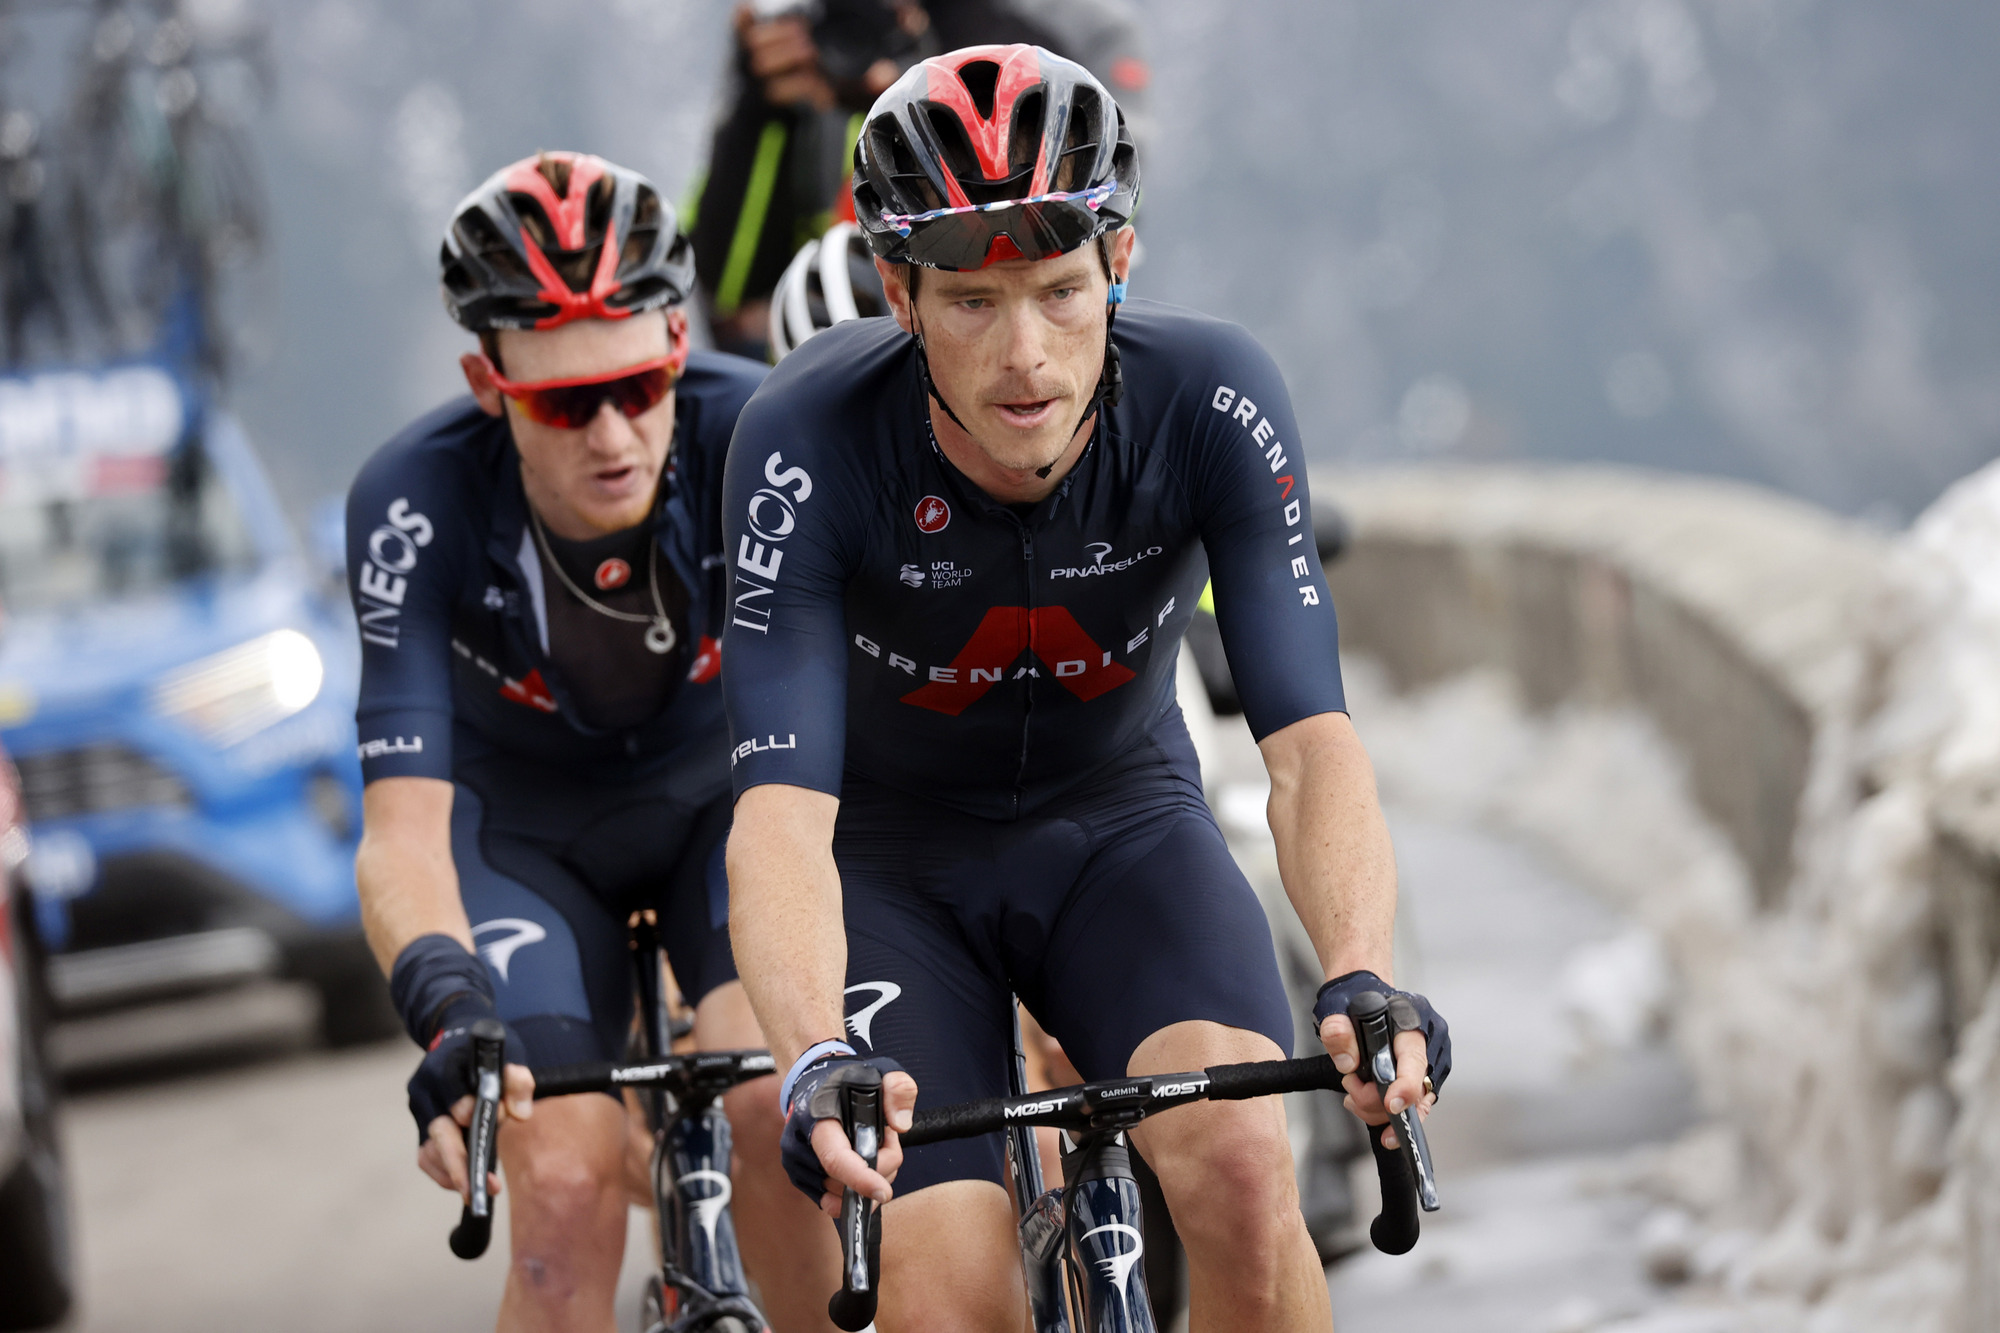 Rohan Dennis paces Ineos Grenadiers teammate Tao Geoghegan Hart up the Passo dello Stelvio on stage 18 of the 2020 Giro d’Italia